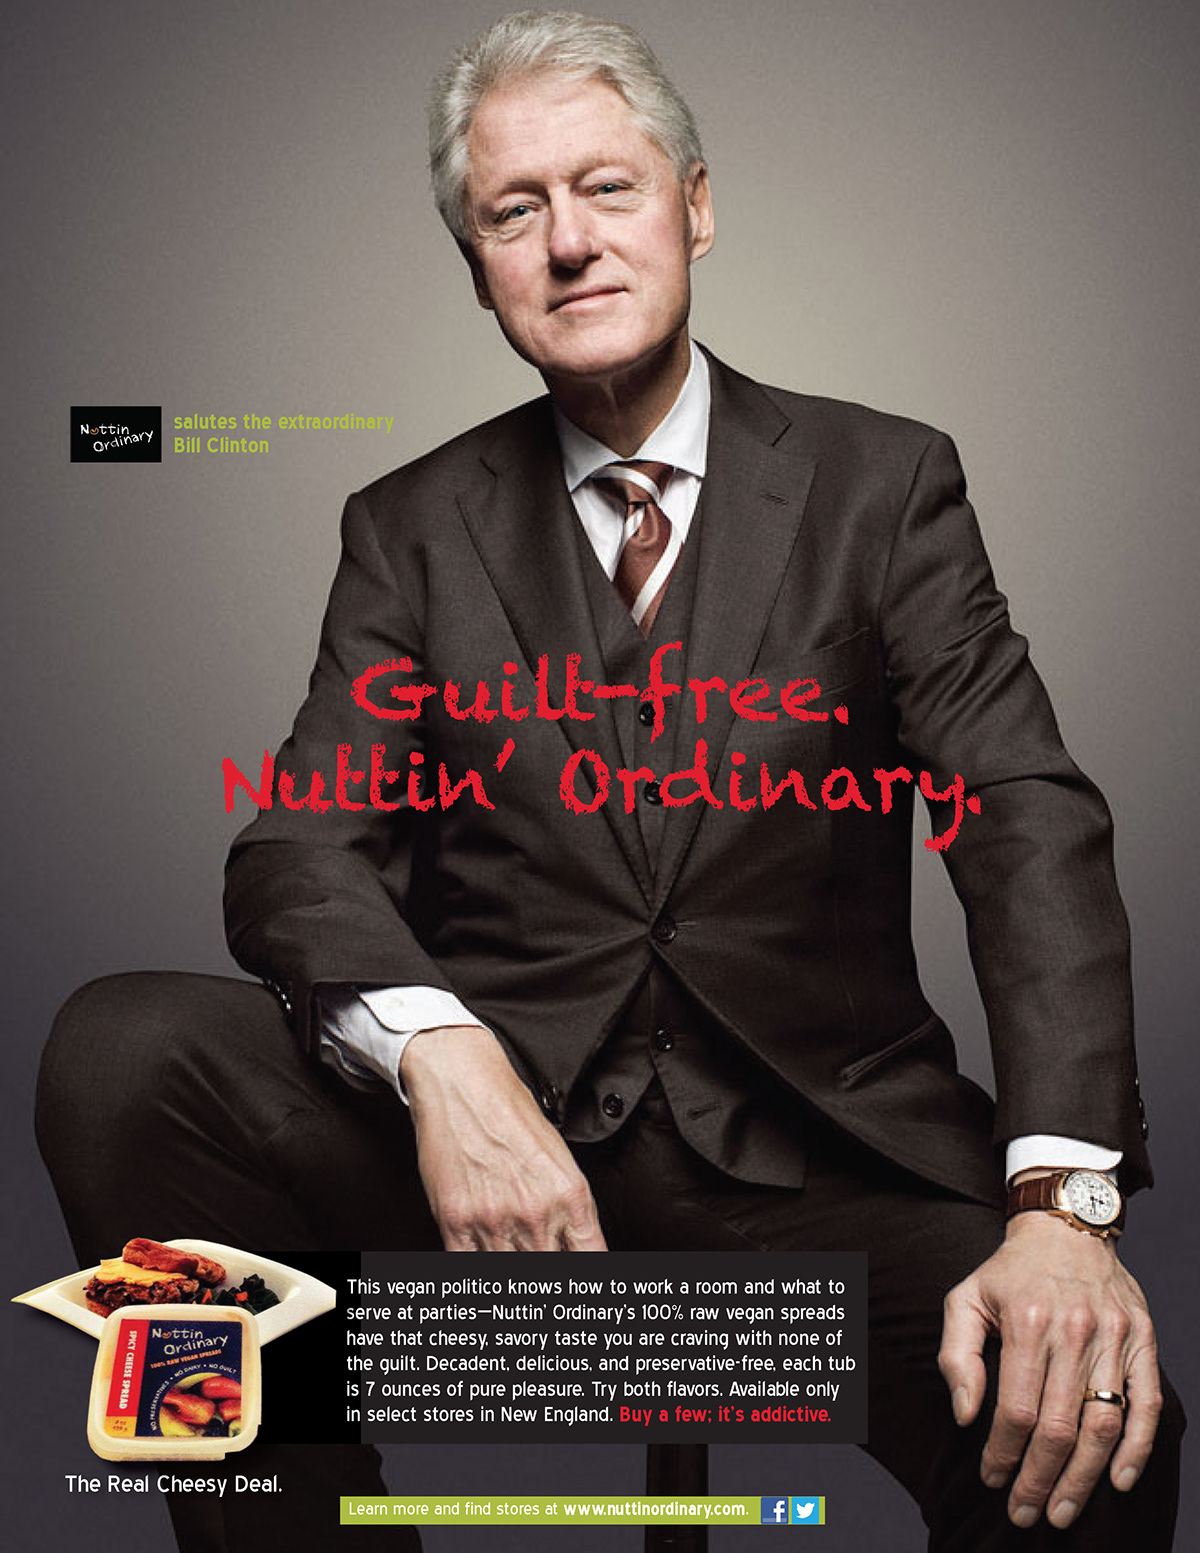 Nuttin' Ordinary vegan print ad campaign Celebrity Bill Clinton ellen degeneres Russell Simmons